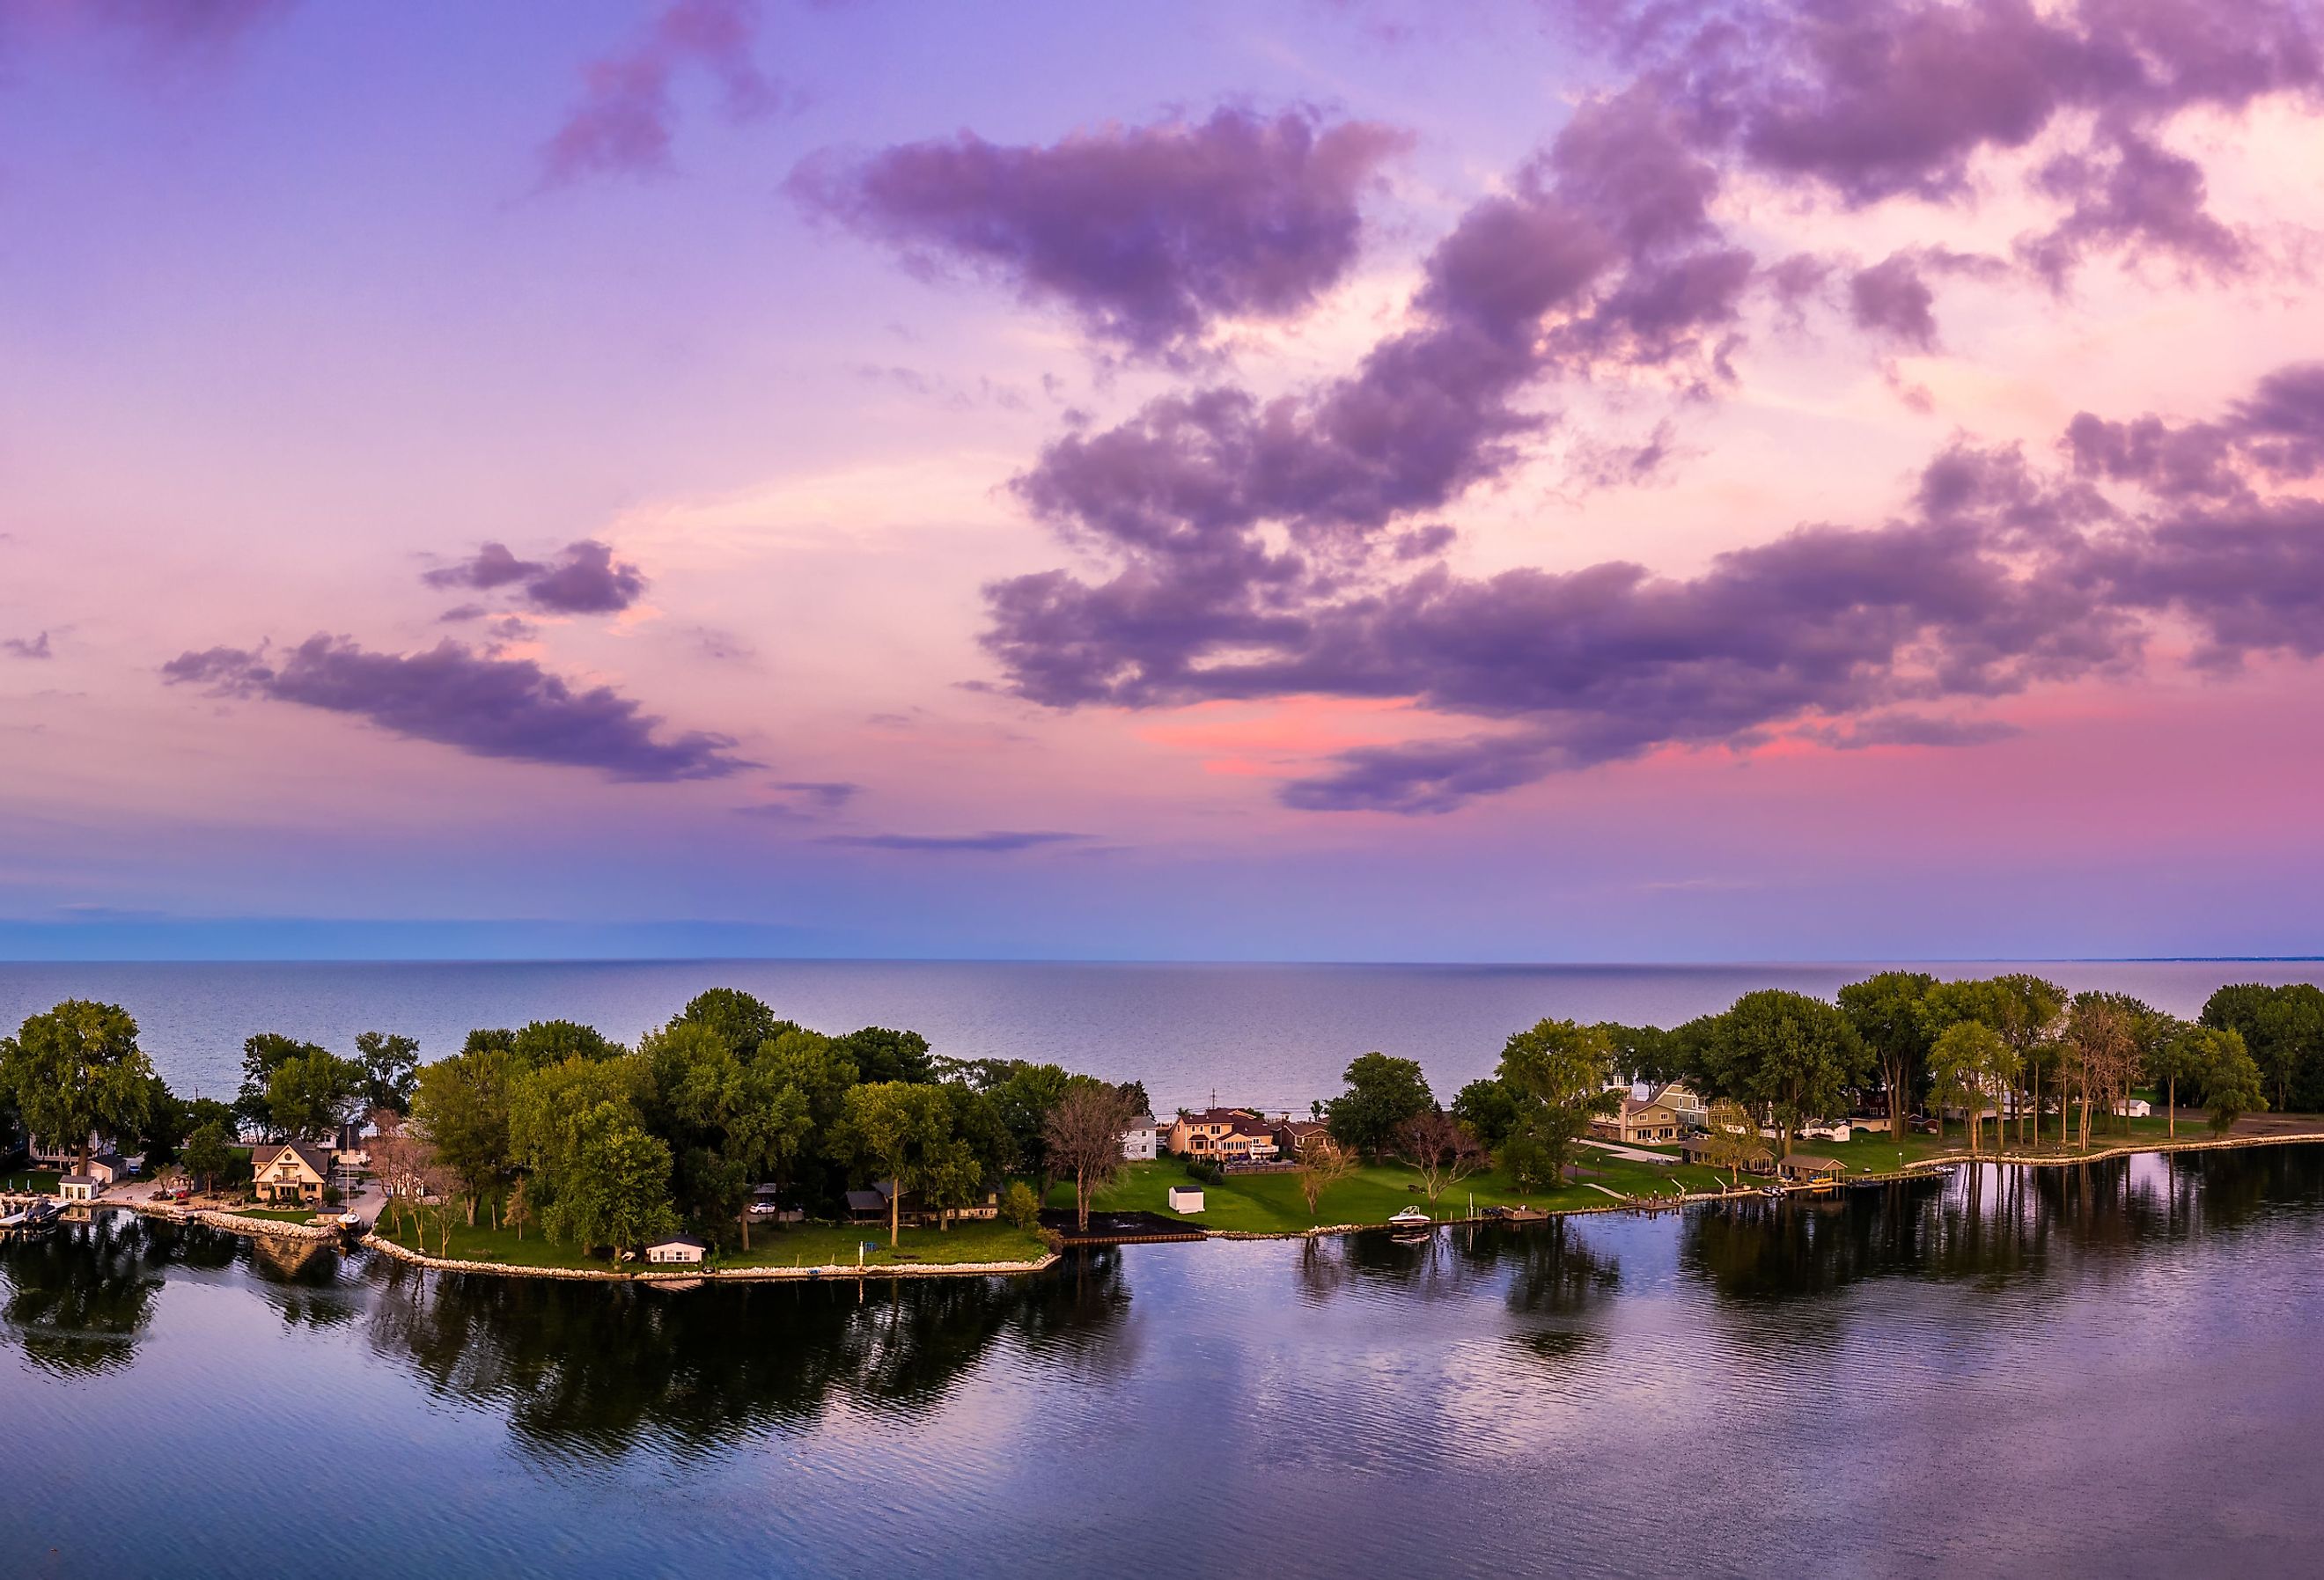 Aerial panorama of the Cedar Point peninsula at dusk, in Sandusky, Ohio, on the Erie lake. Image credit Mihai_Andritoiu via Shutterstock.